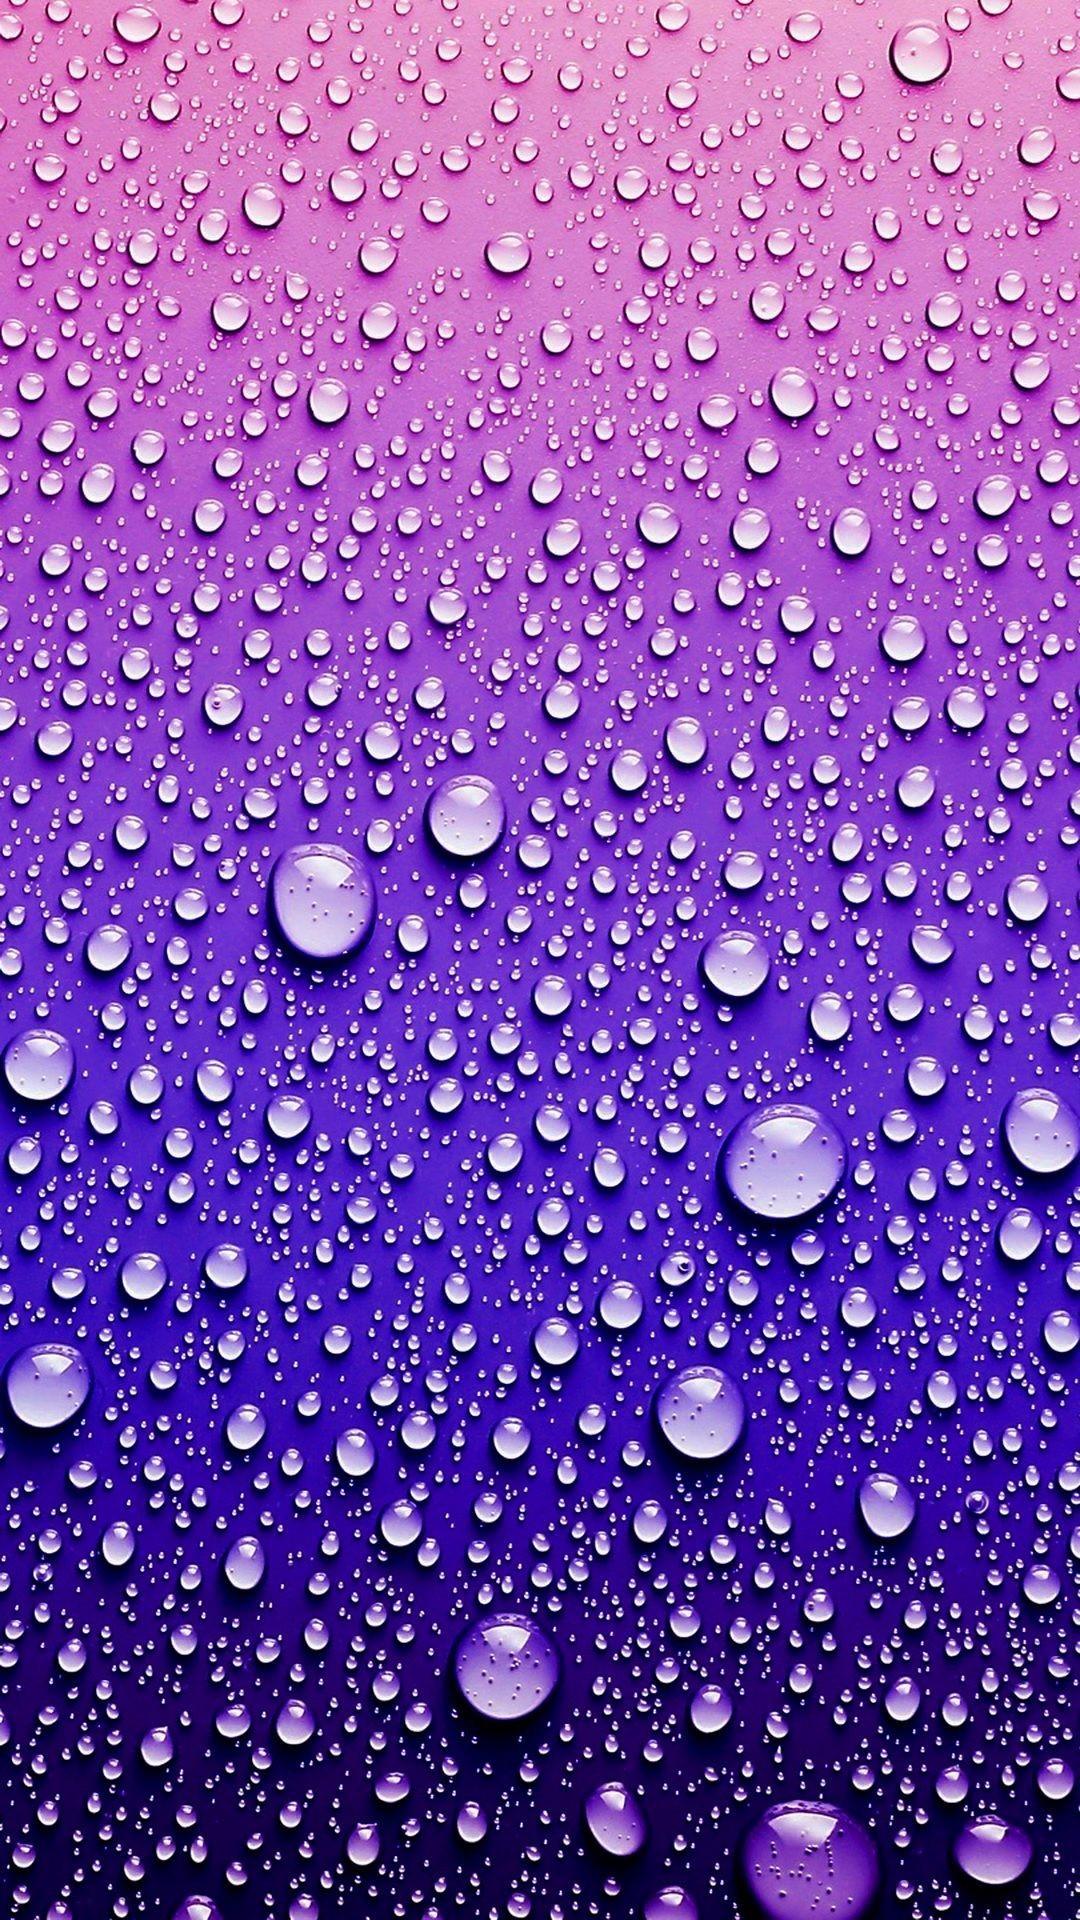 iPhone Water Drop Wallpapers Wallpaper Cave